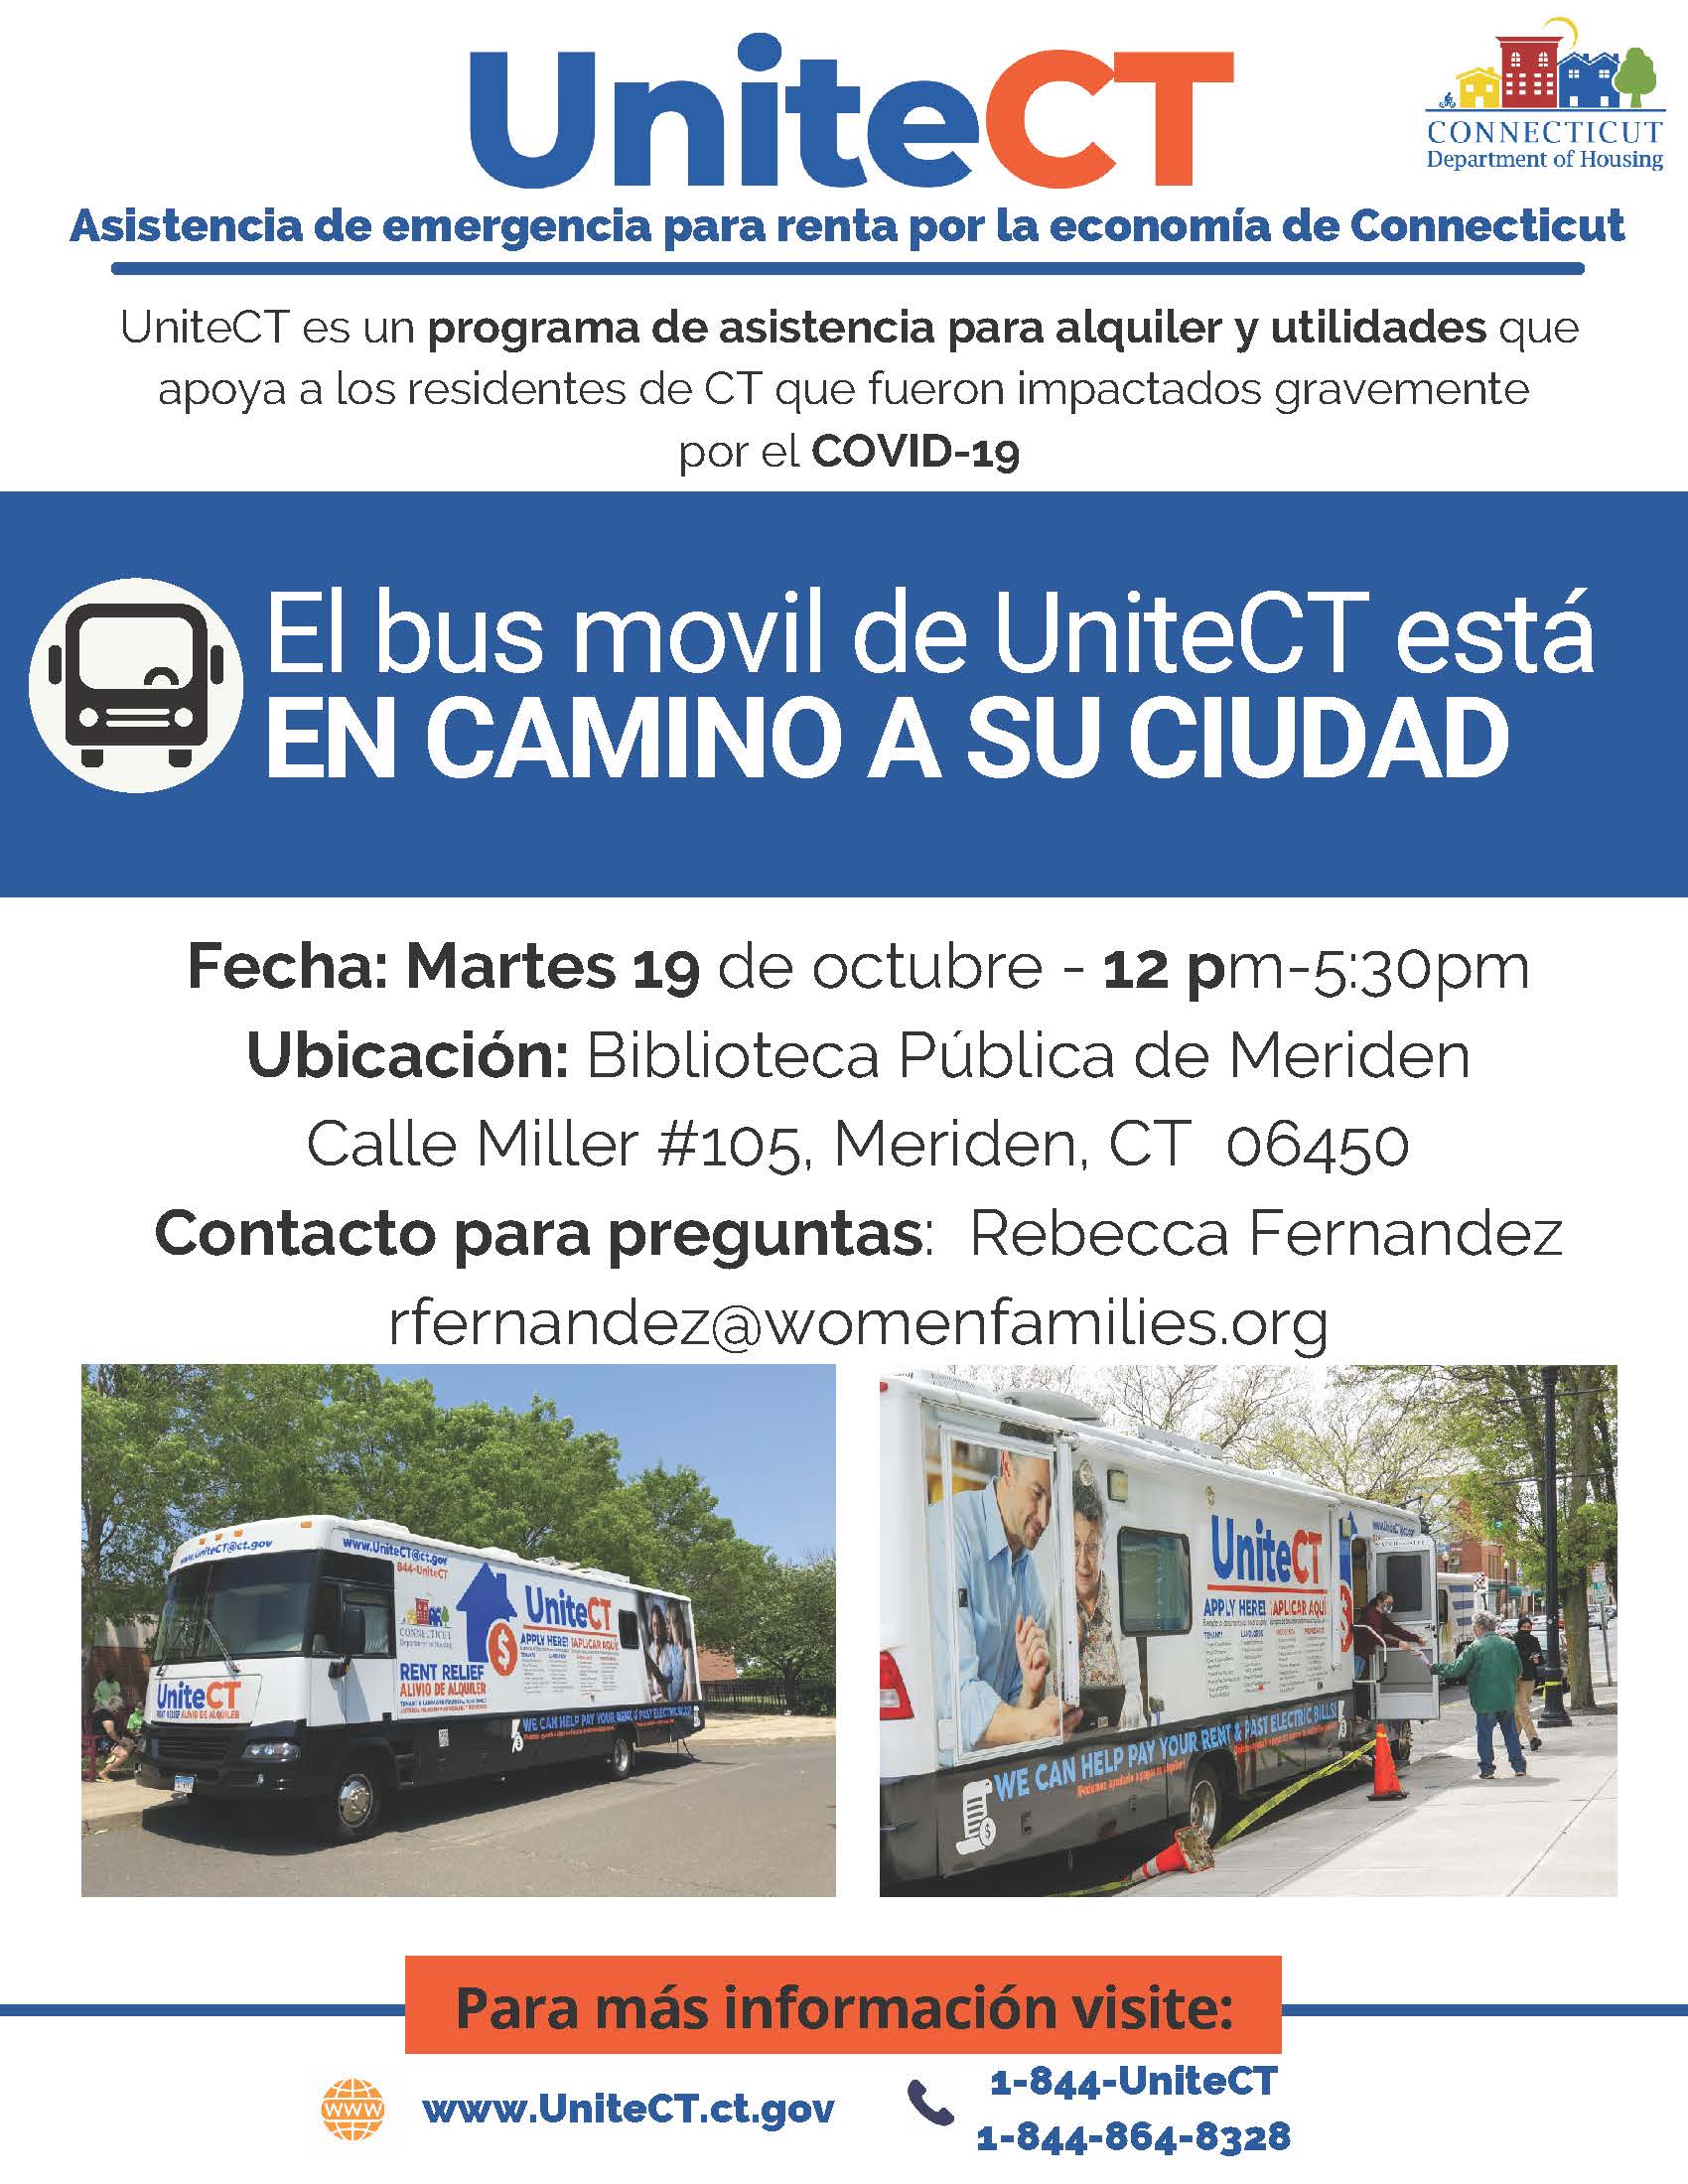 UNITEDCT Mobile Unit Arrives in Meriden